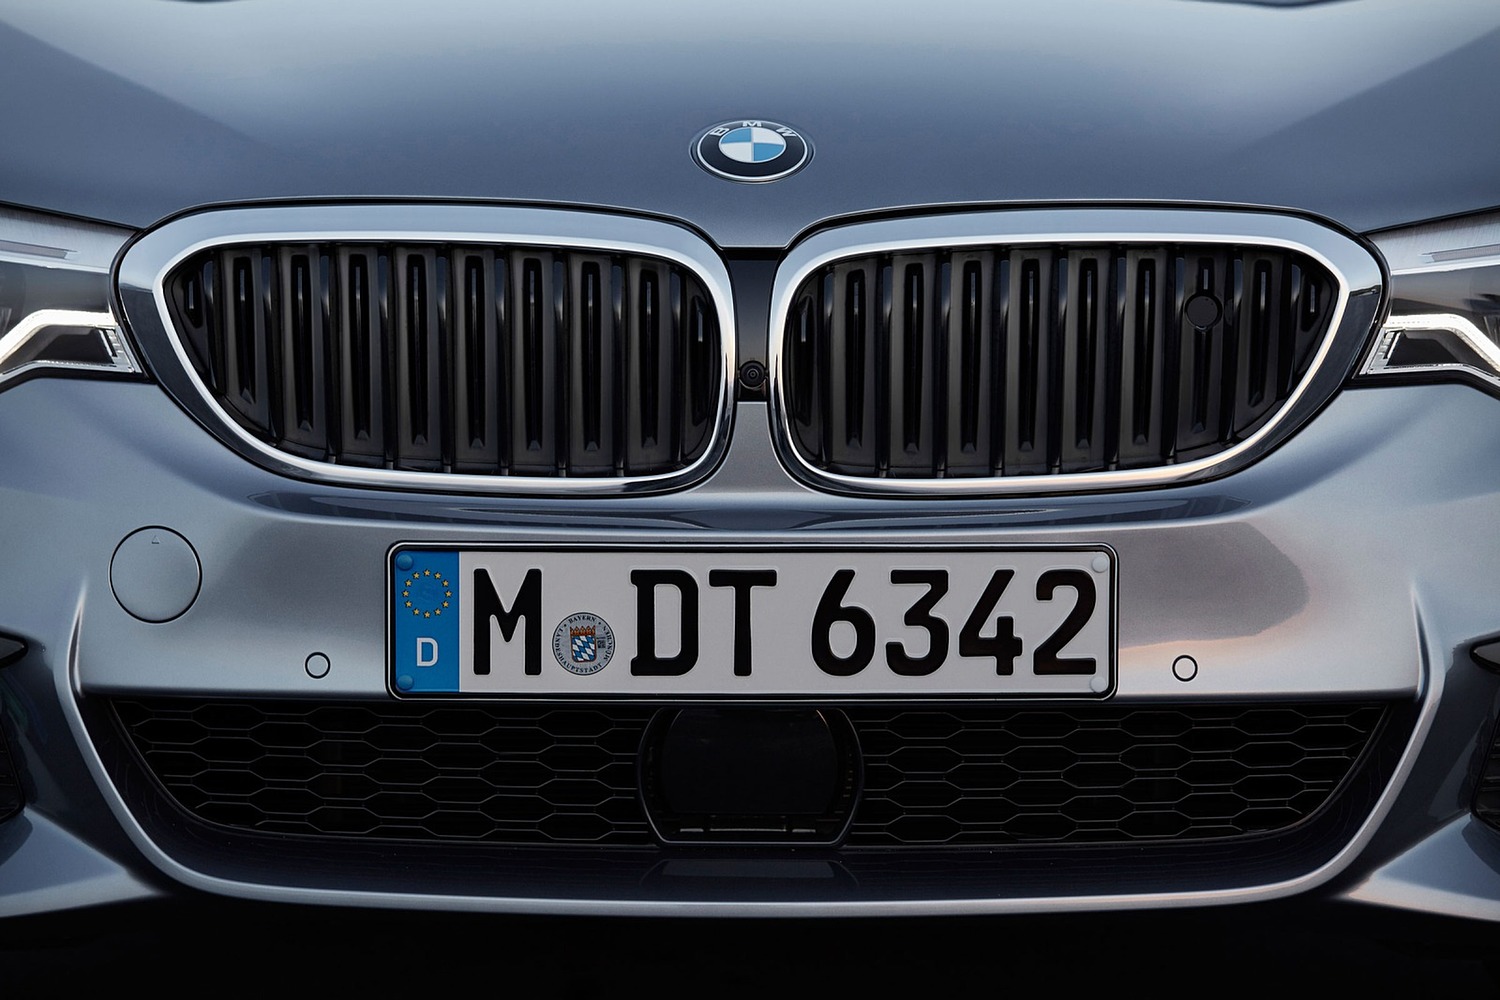 BMW 5 Series 540i Sedan Exterior Detail. M Package Shown. (2017 model year shown)